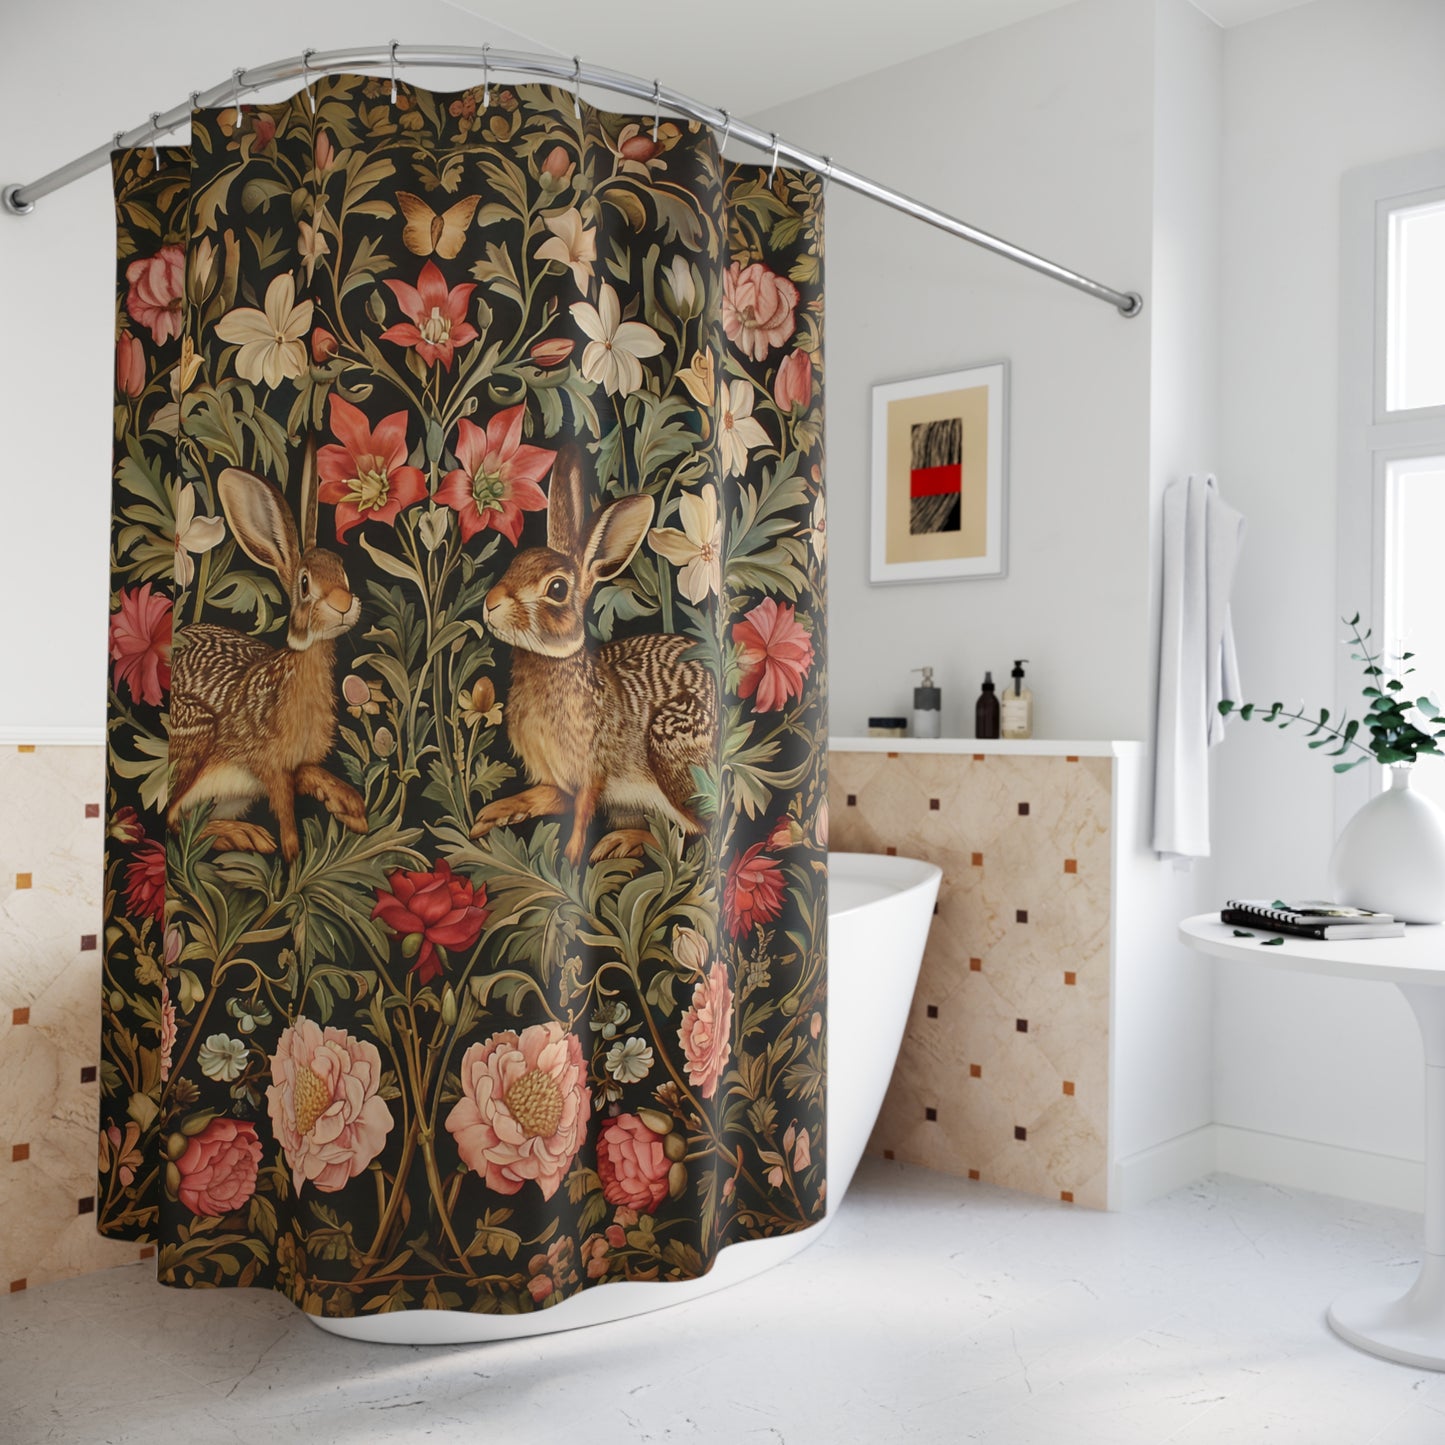 Adorable Bunnies Floral Garden Shower Curtain, William Morris Inspired, Farmhouse Bathroom, Floral Shower Curtain, 71" x 74"